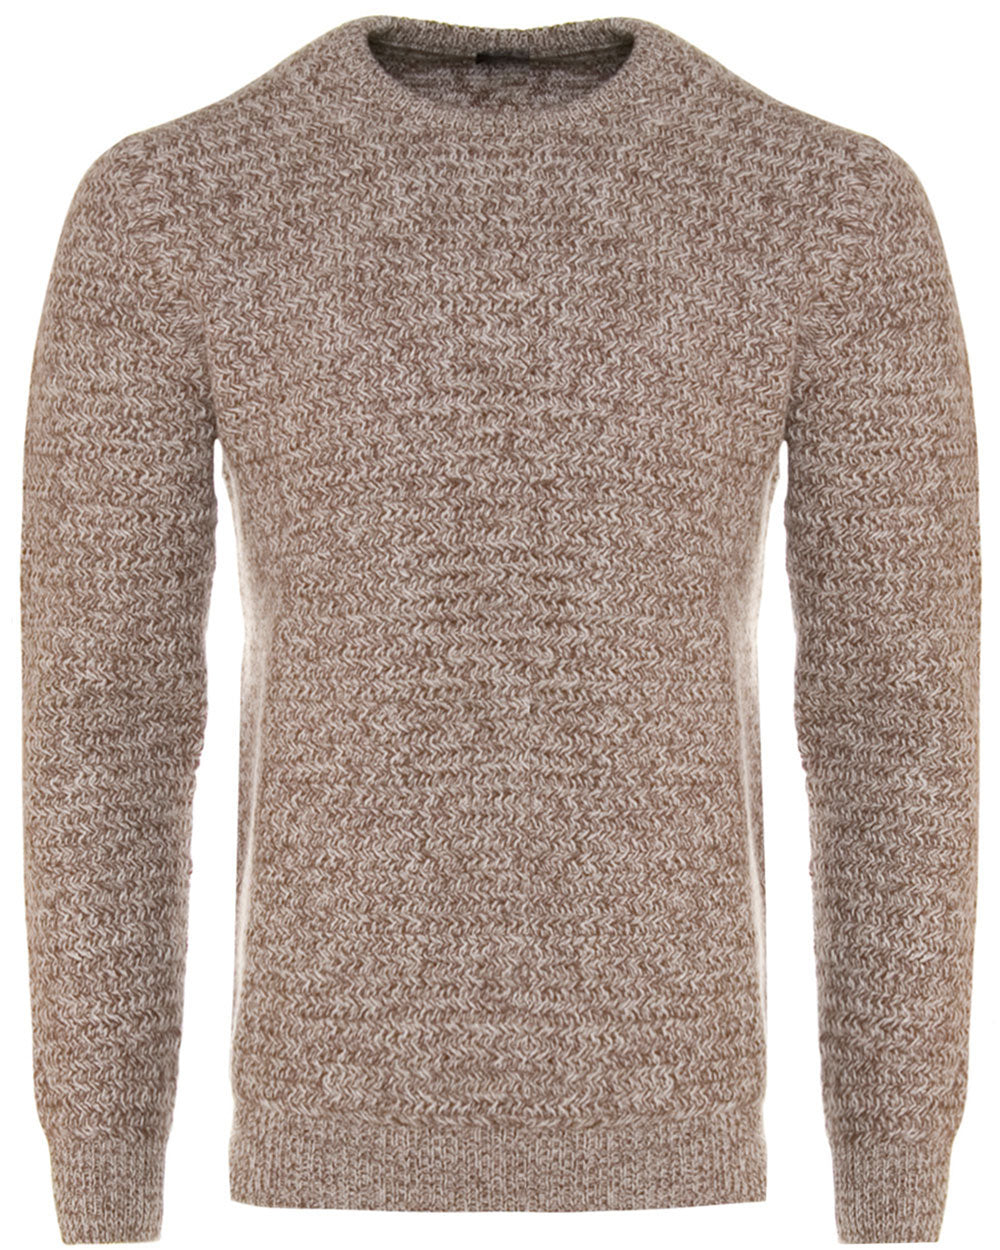 Brown Melange Crewneck Sweater